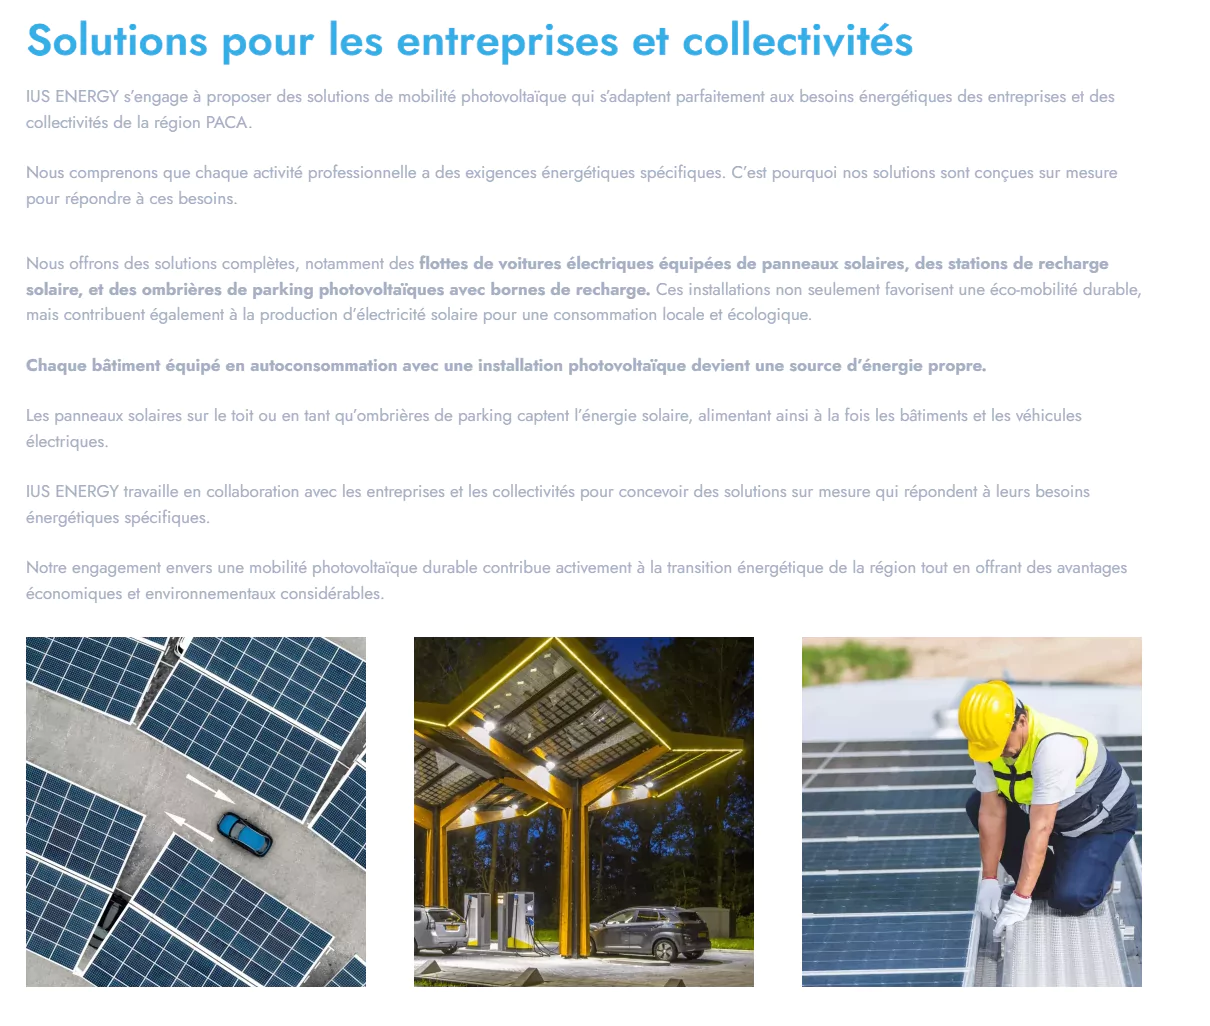 ius-energy-solar-powered-car-parks-businesses-local-authorities